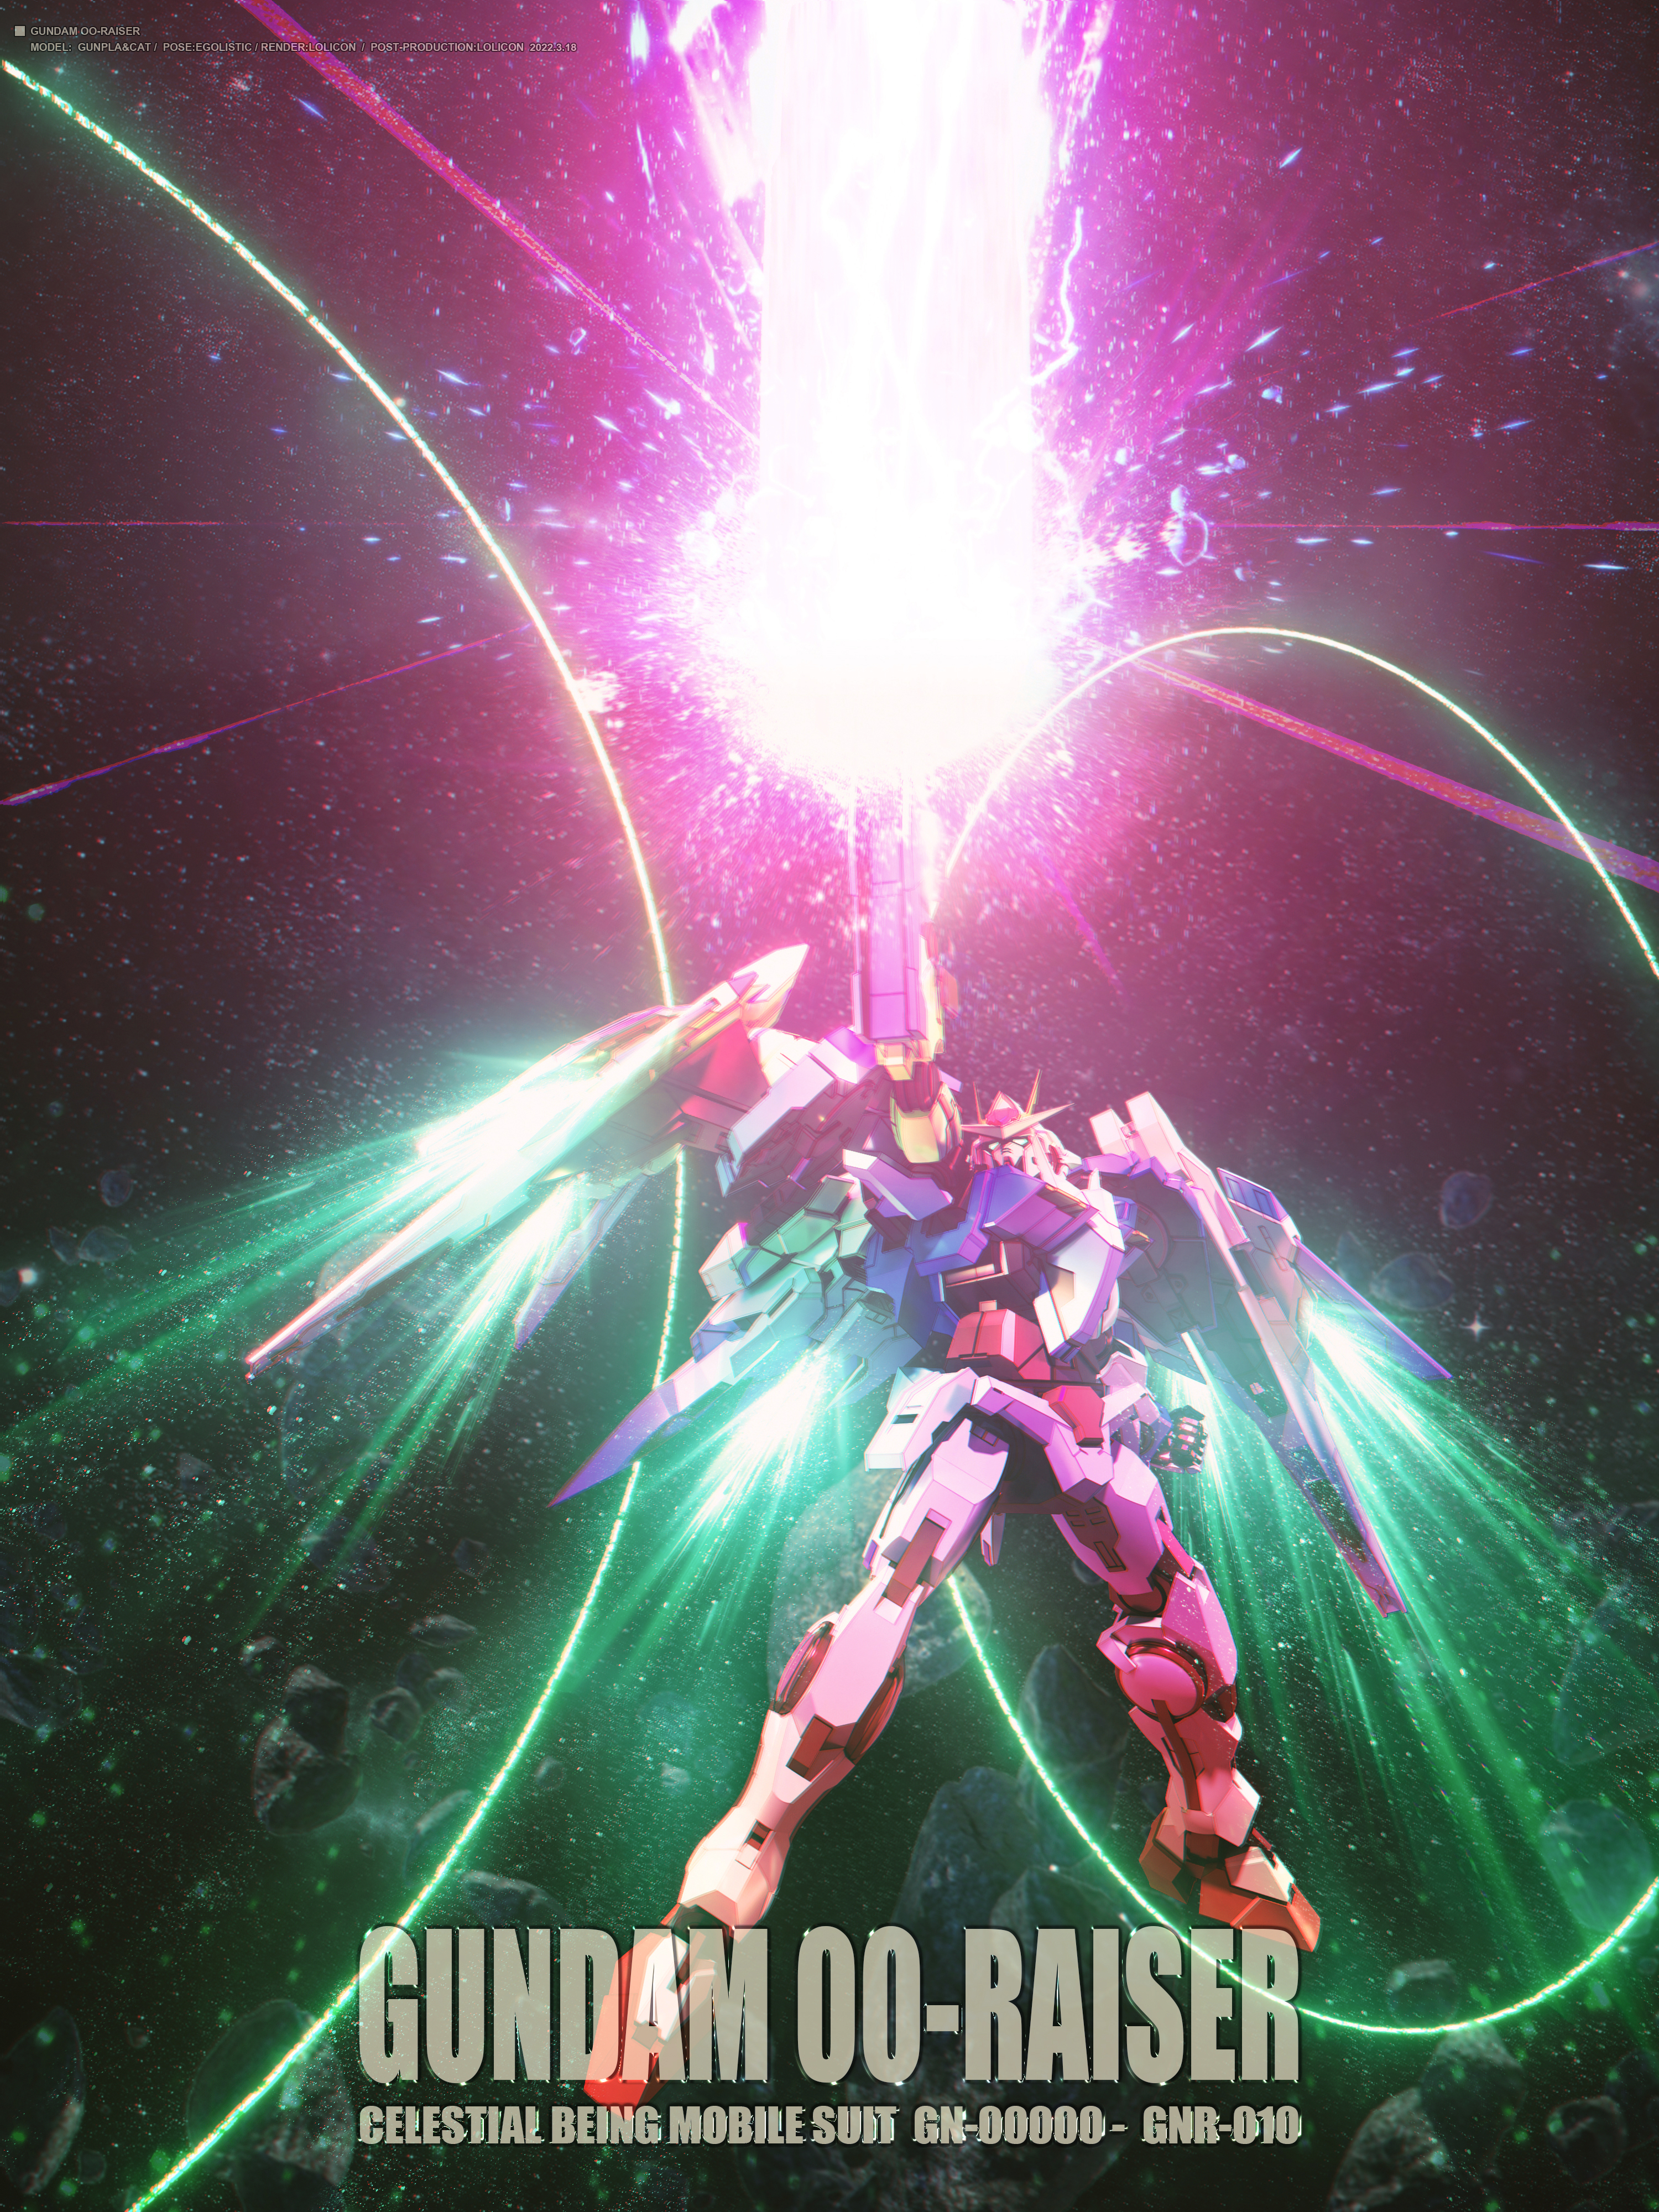 Anime 3000x4000 anime mechs Gundam Super Robot Taisen 00 Raiser Mobile Suit Gundam 00 artwork digital art fan art